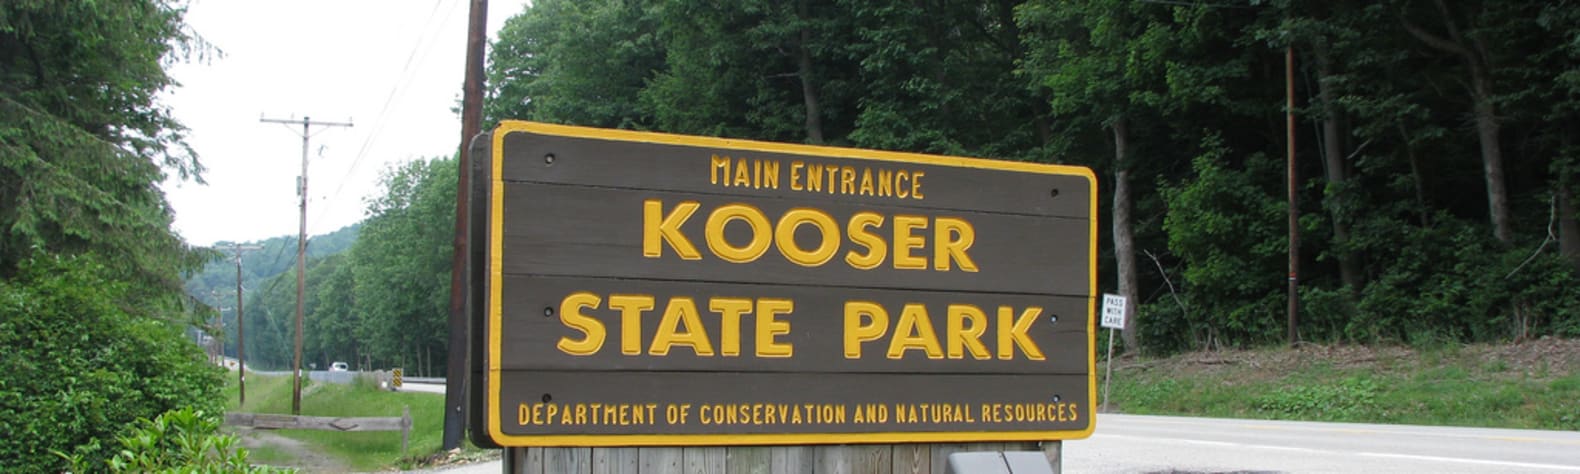 Kooser State Park